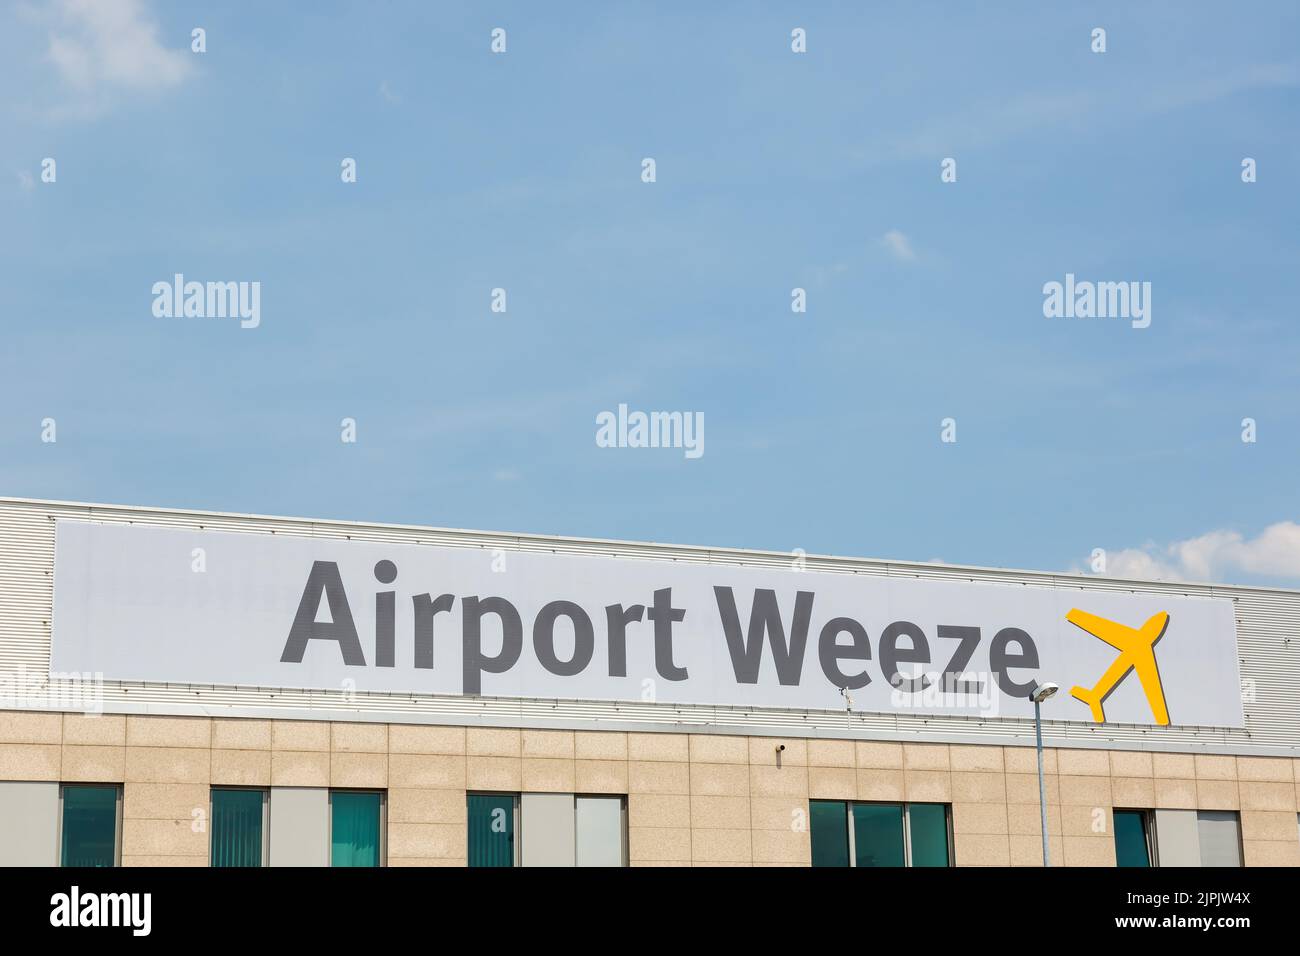 aeroporto weeze, flughafen niederrhein, verkehrsflughafen, weeze Foto Stock